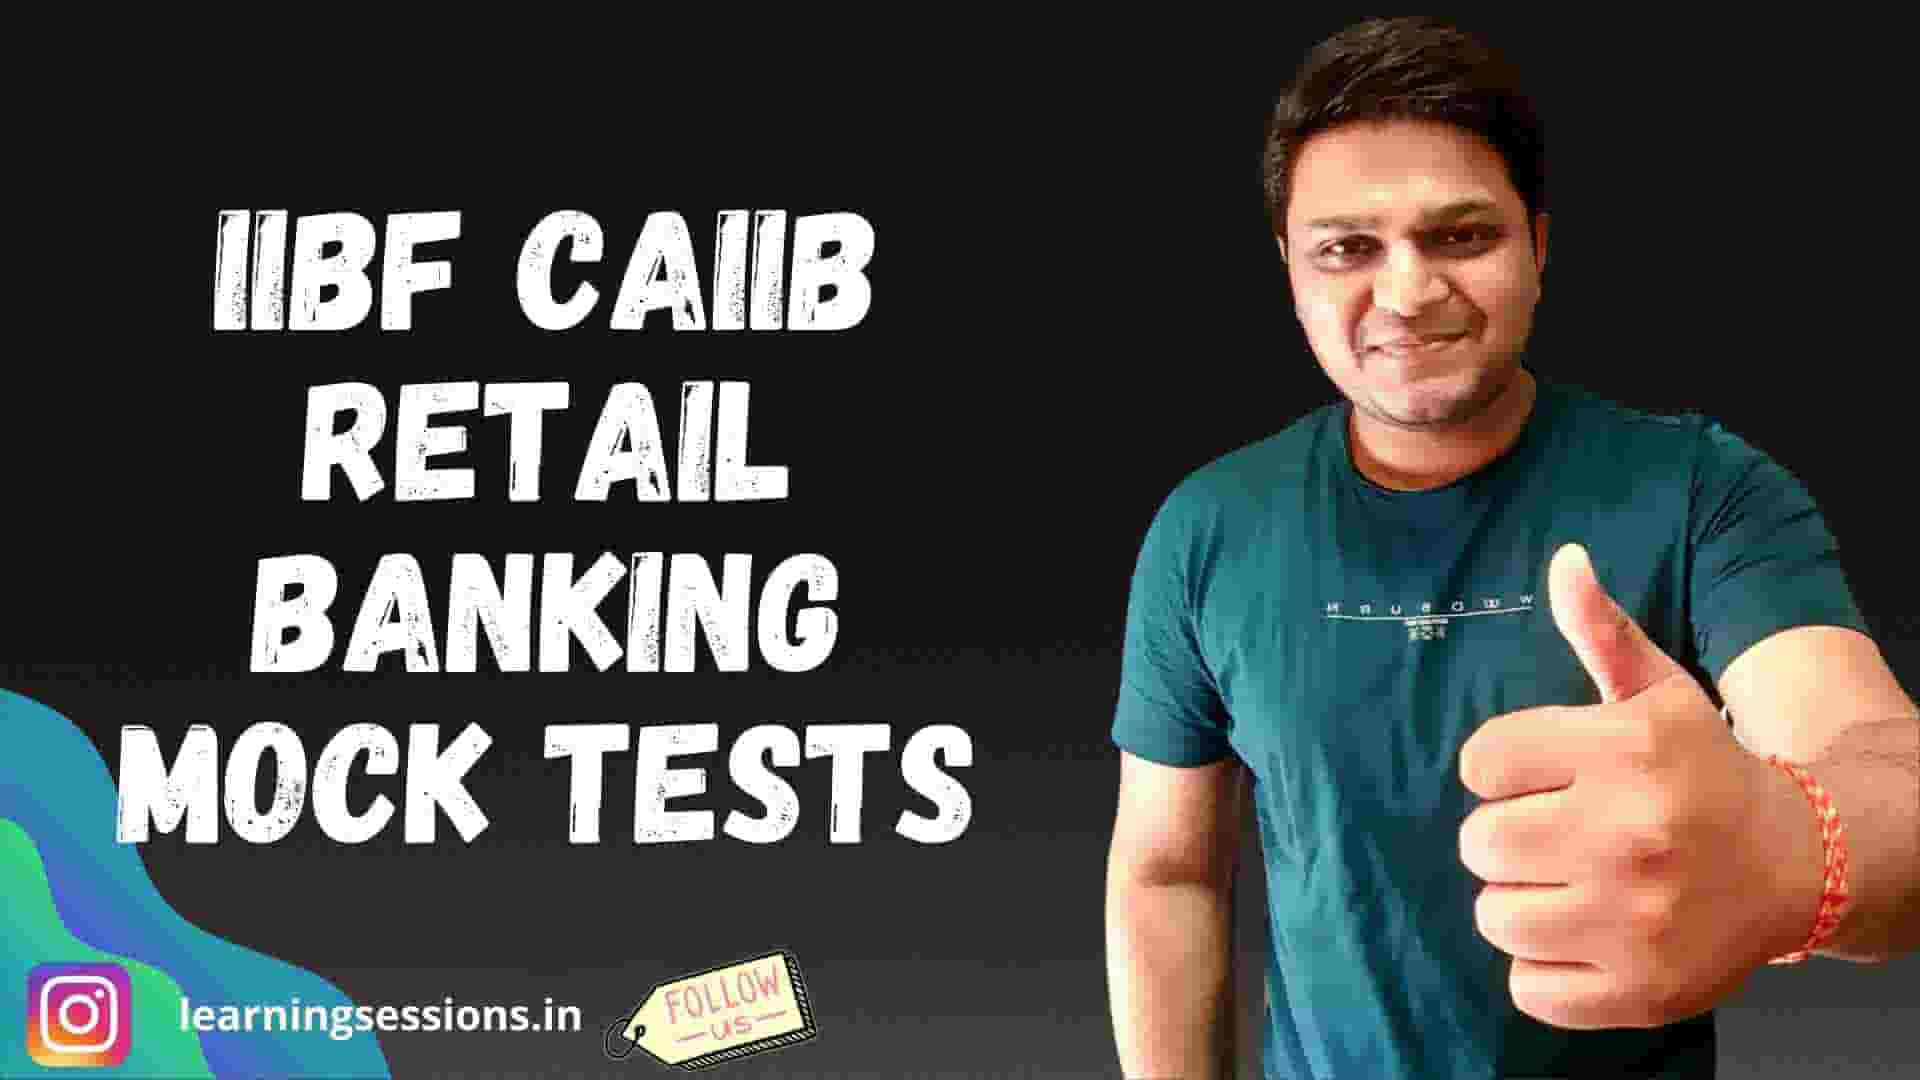 IIBF CAIIB RETAIL BANKING MOCK TESTS